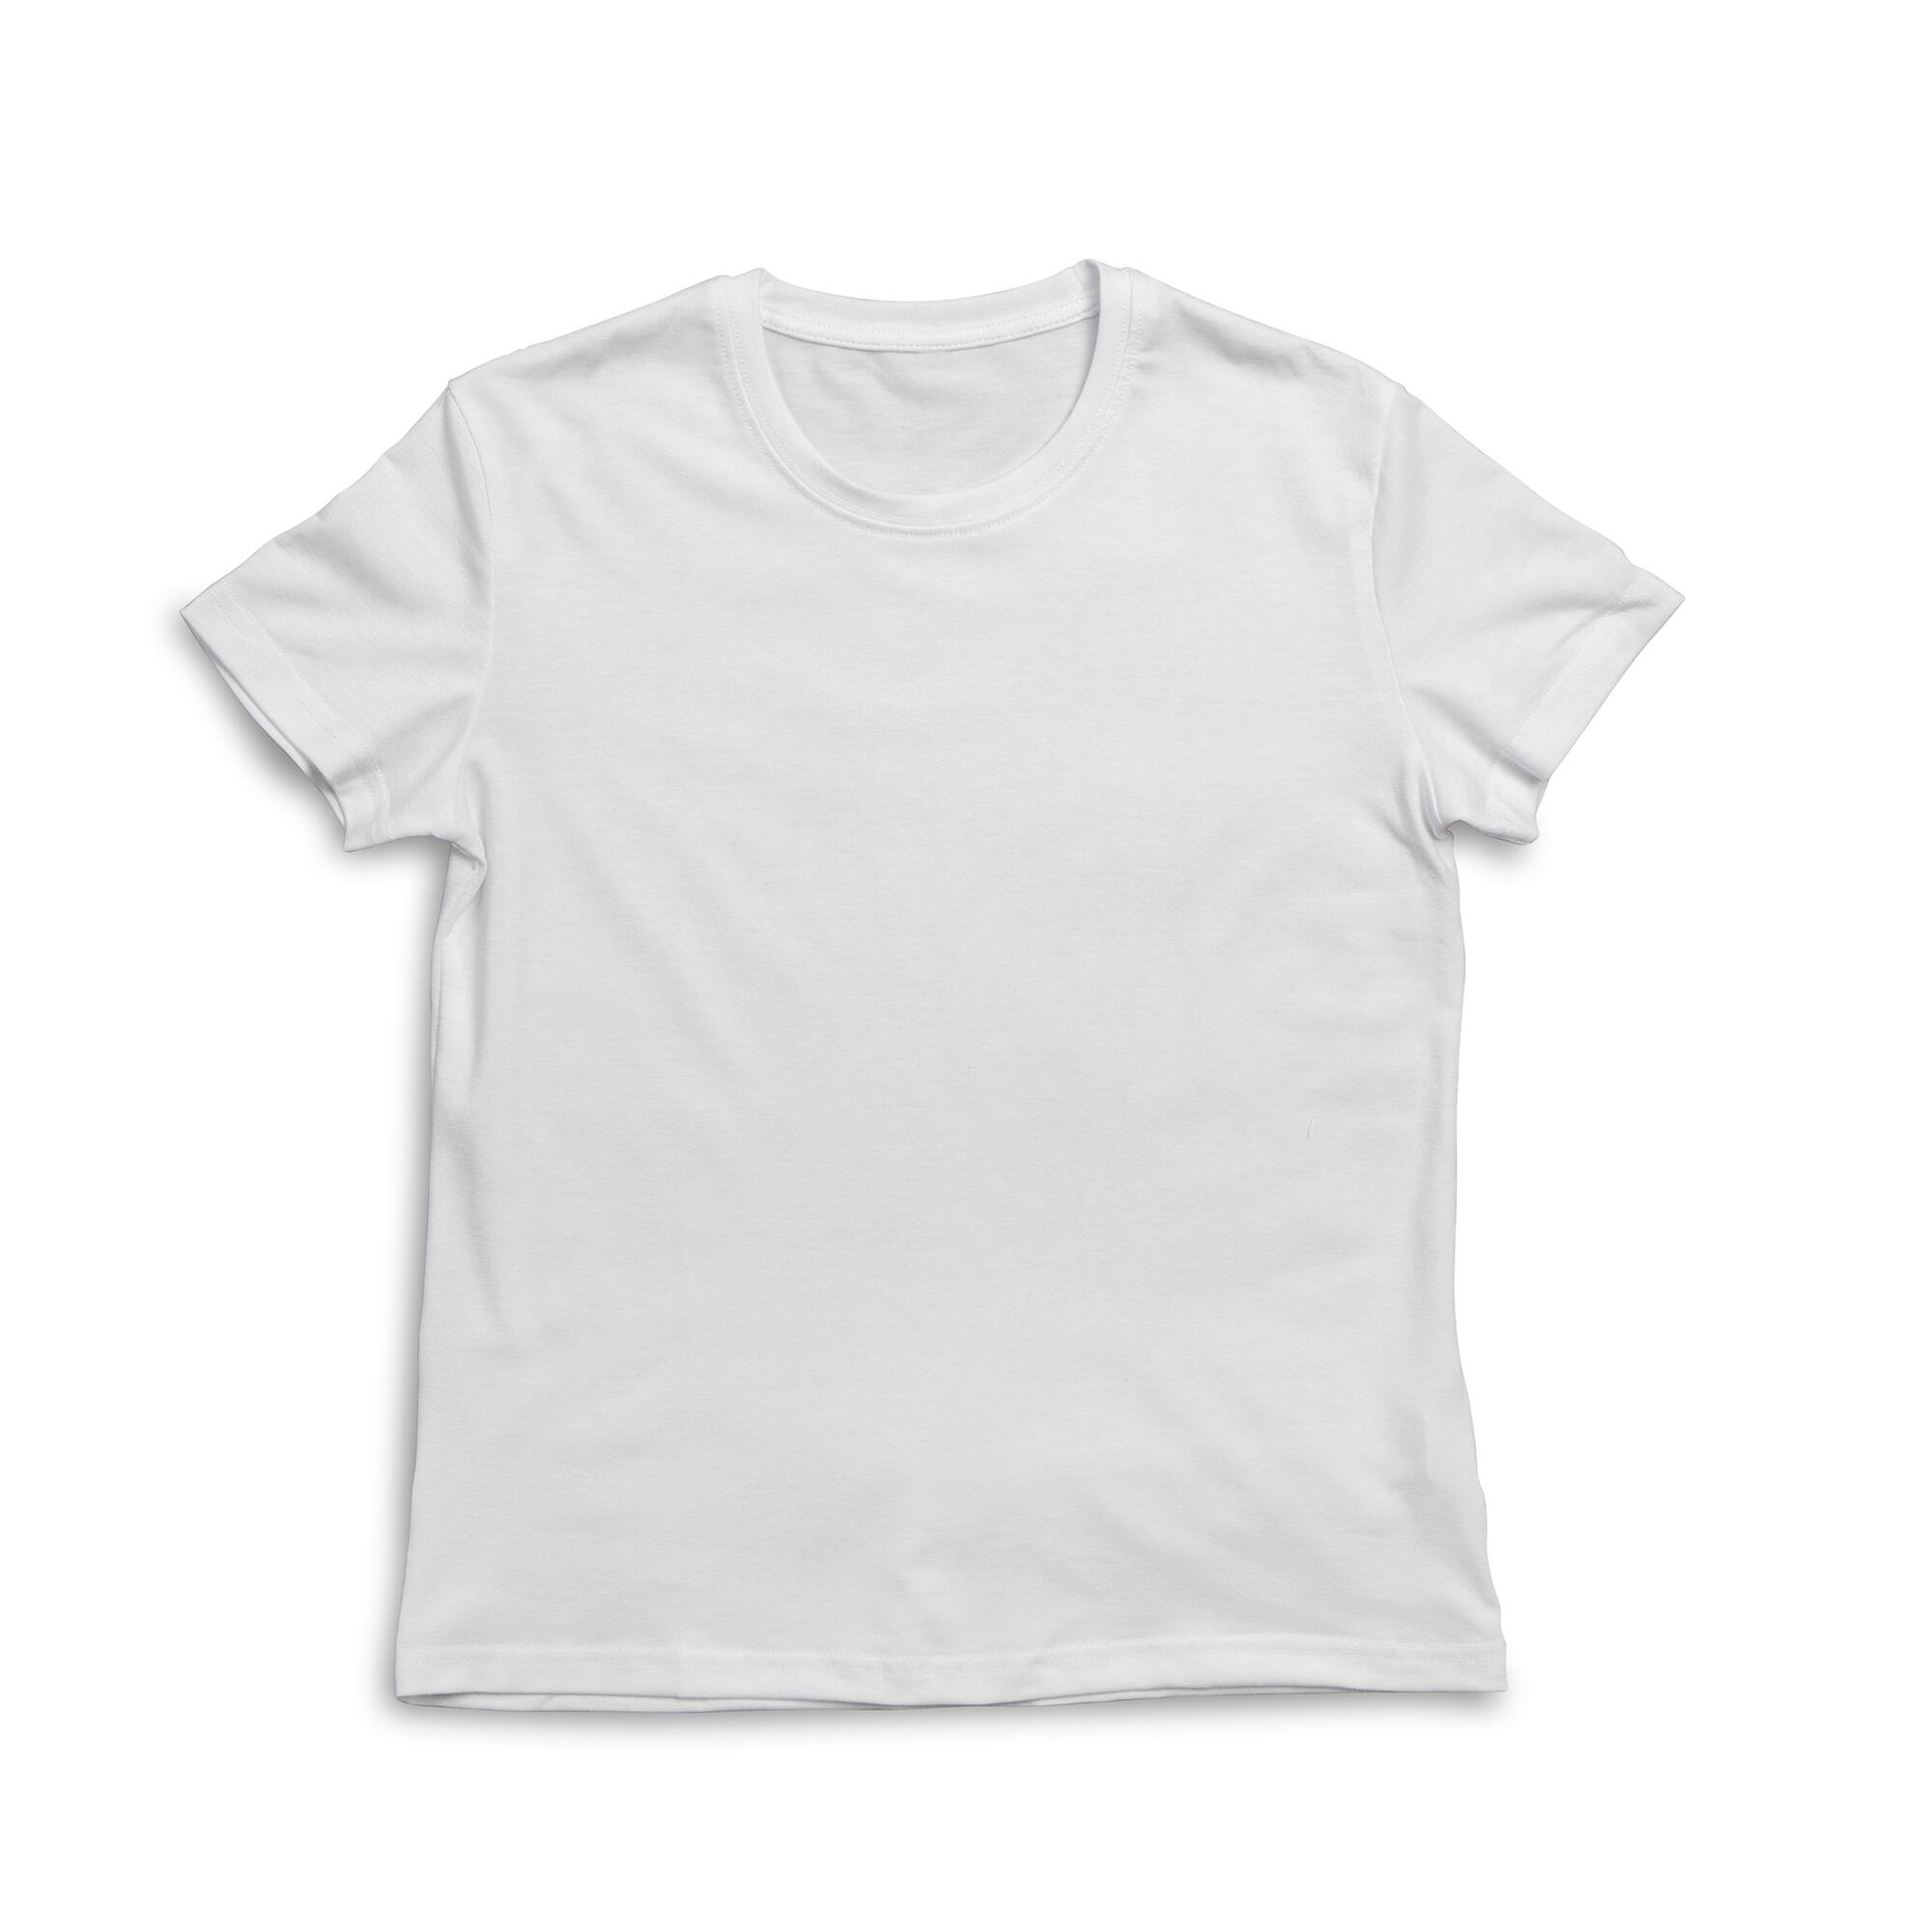 michaels blank t shirts